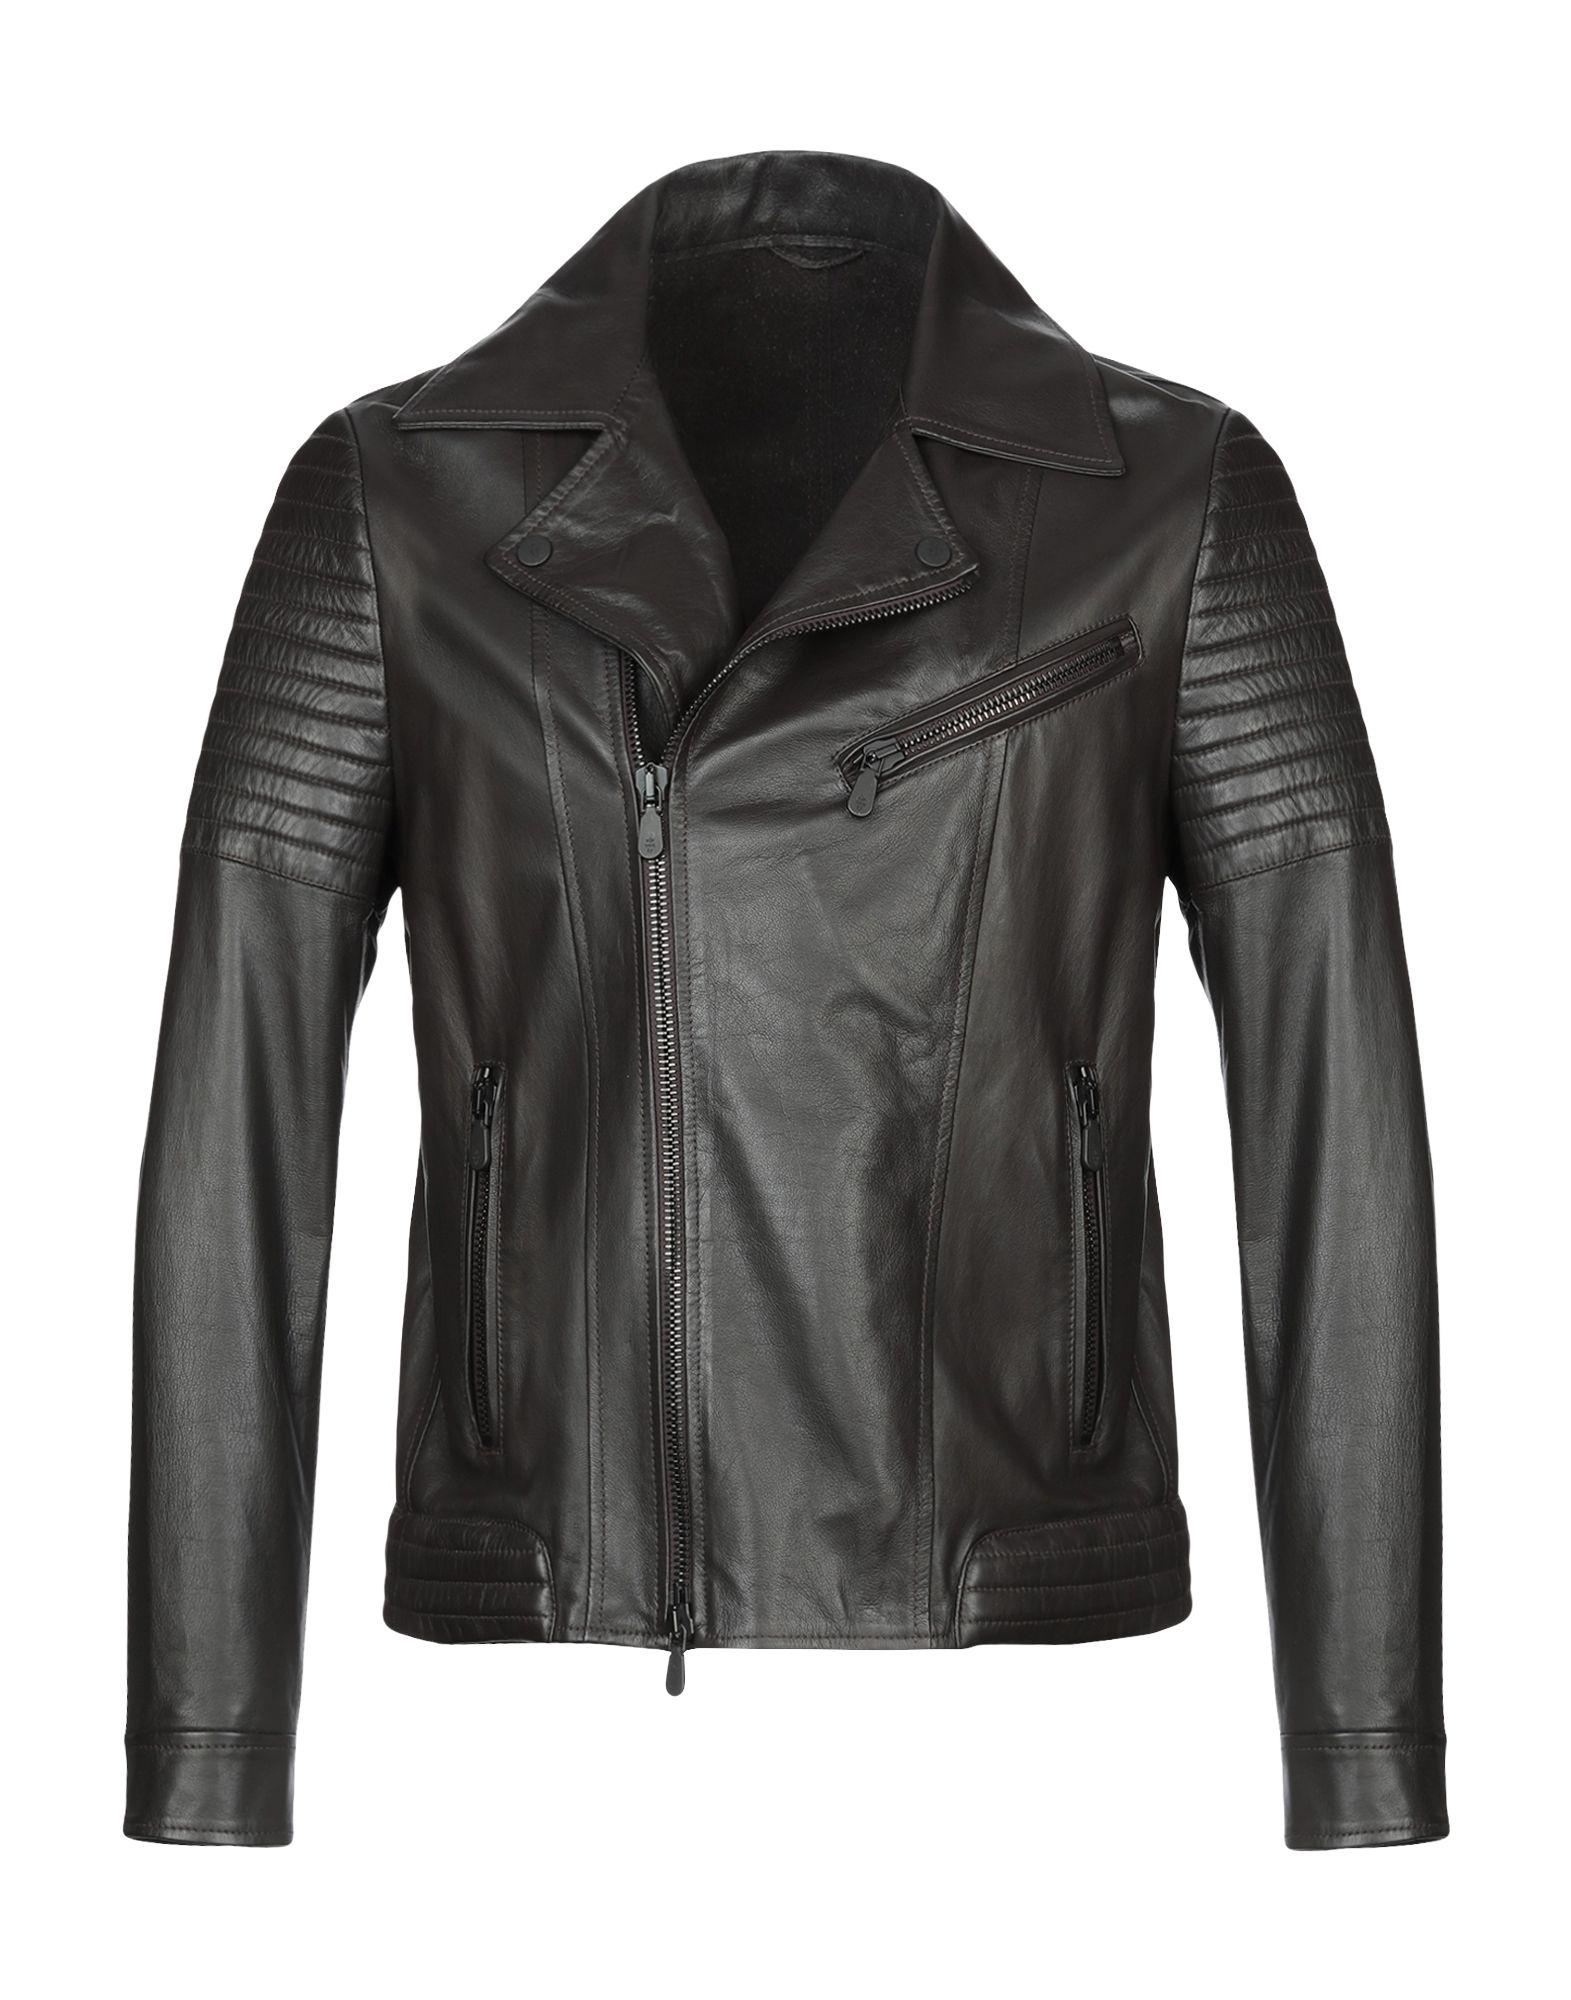 Eleventy Leather Jacket in Dark Brown (Brown) for Men - Lyst